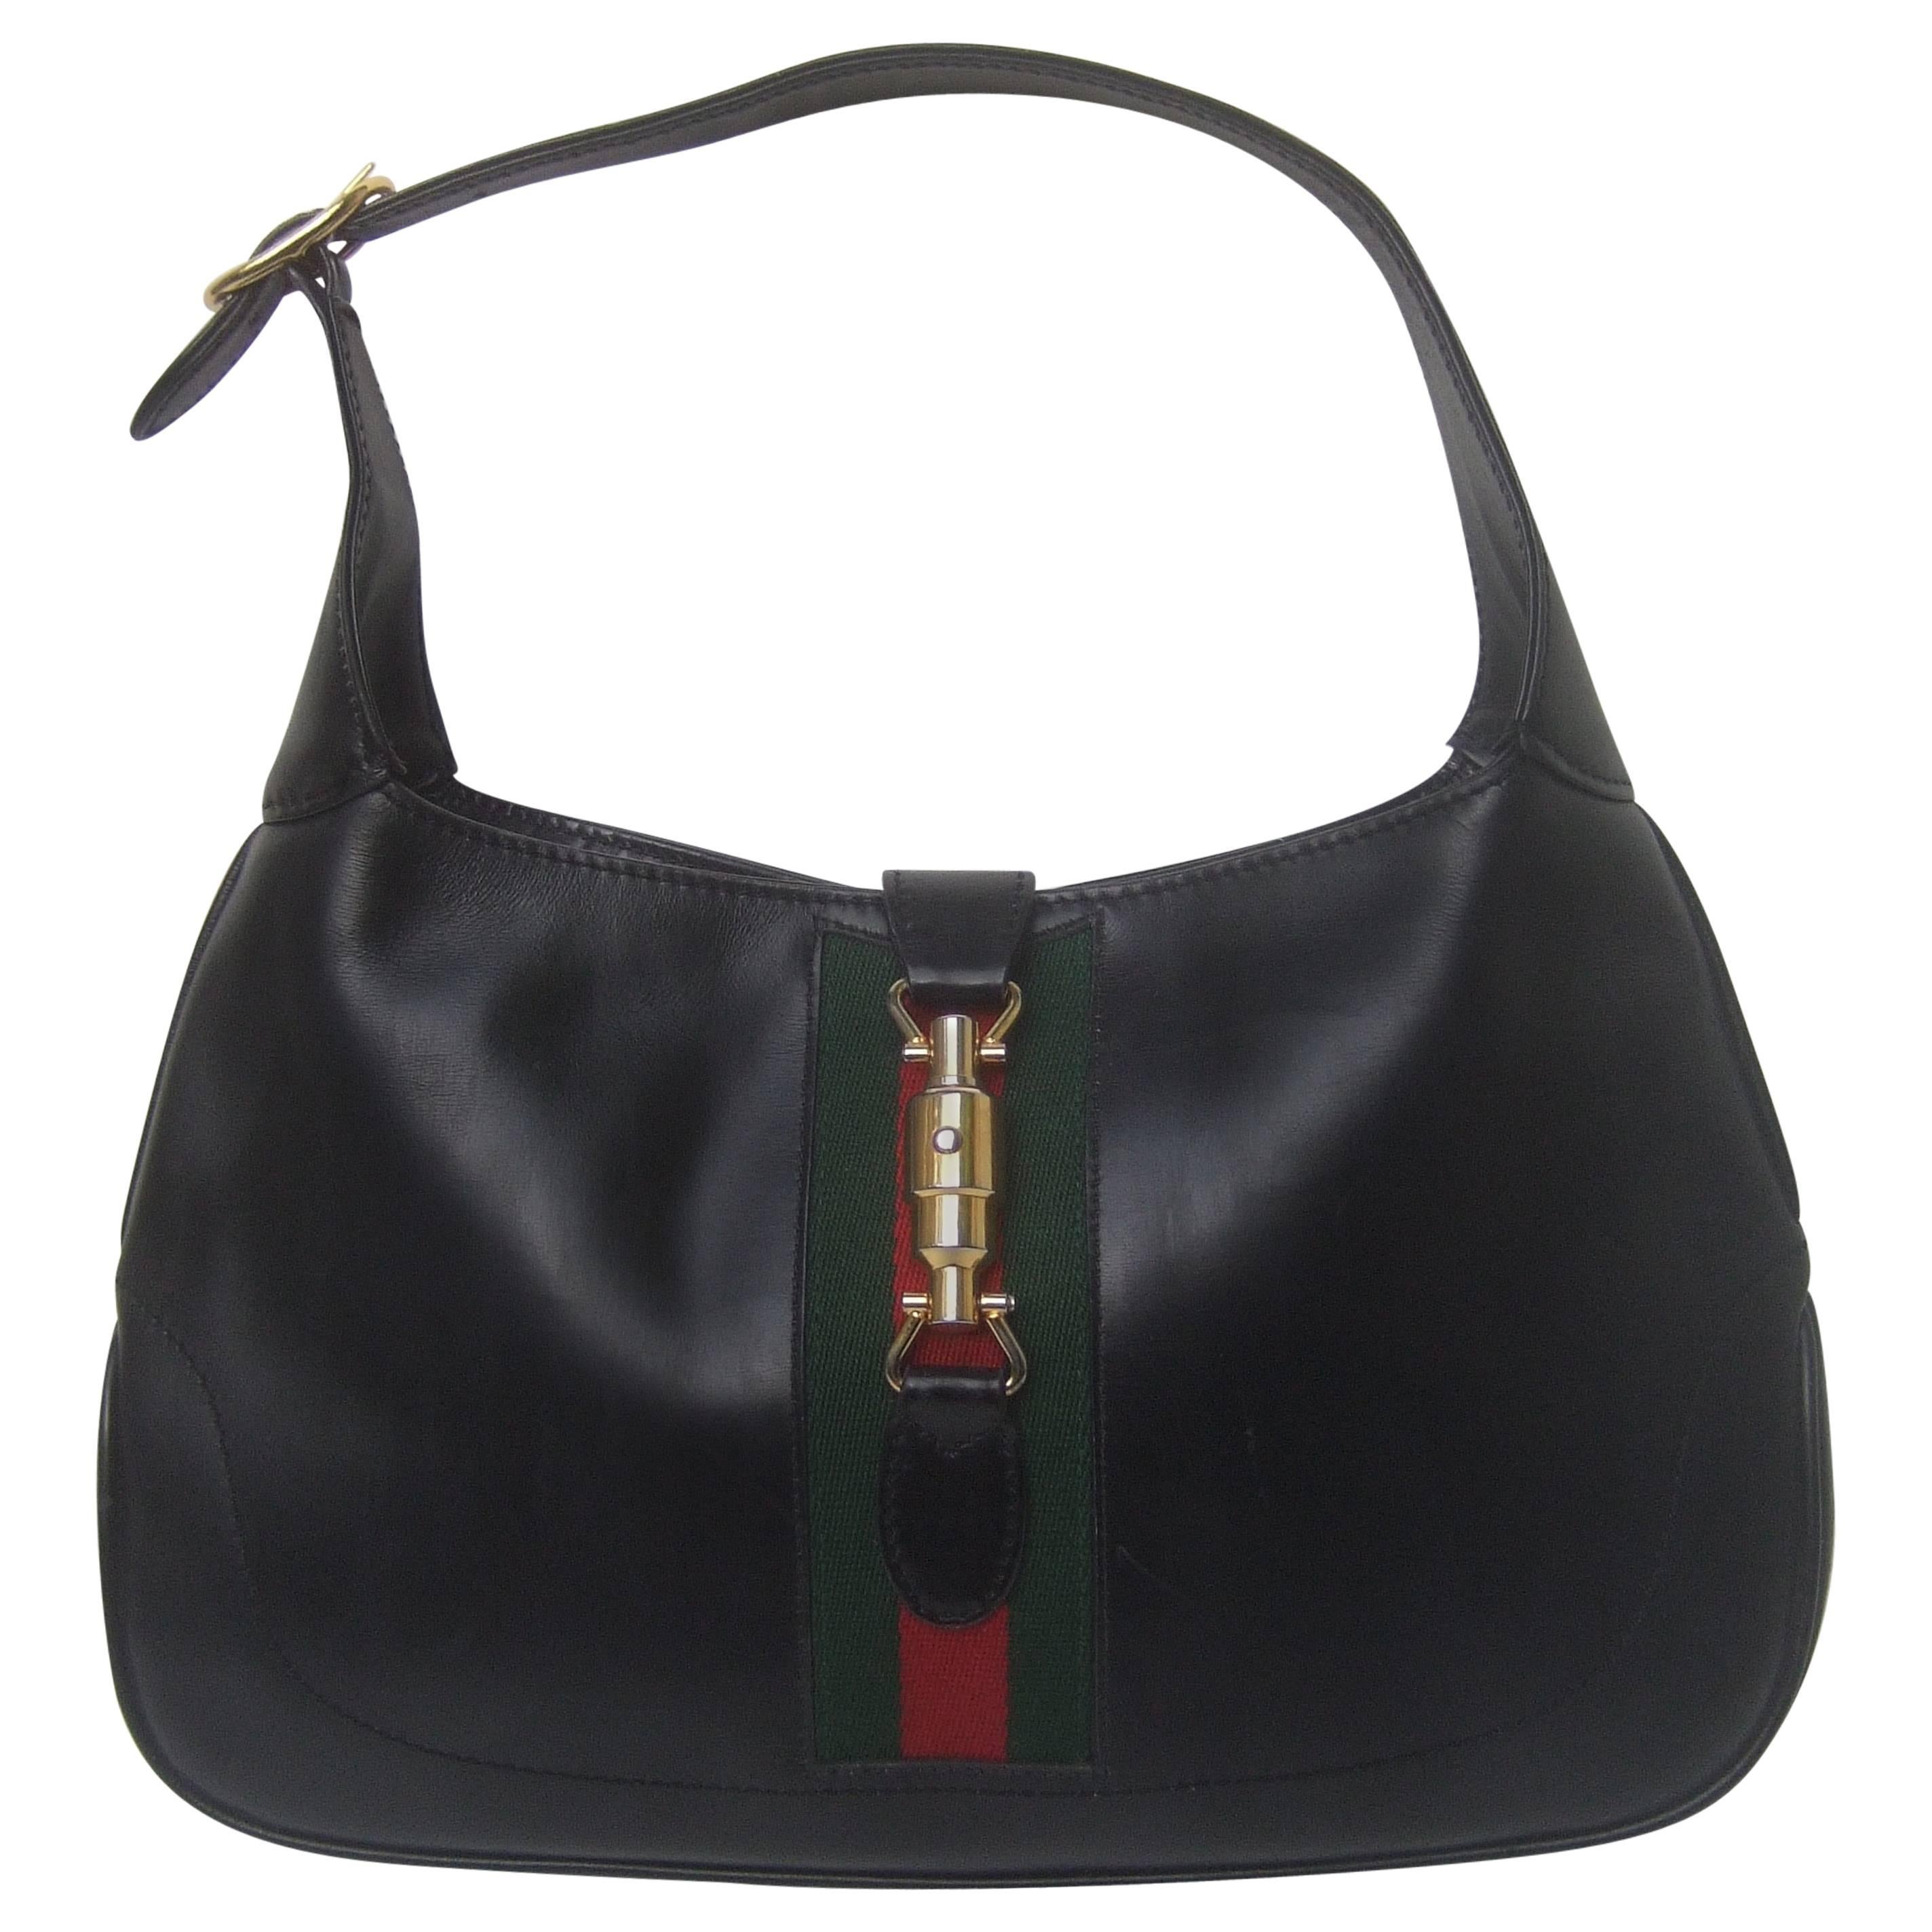 Gucci Italy Iconic Ebony Leather Jackie O Piston Handbag c 1970s